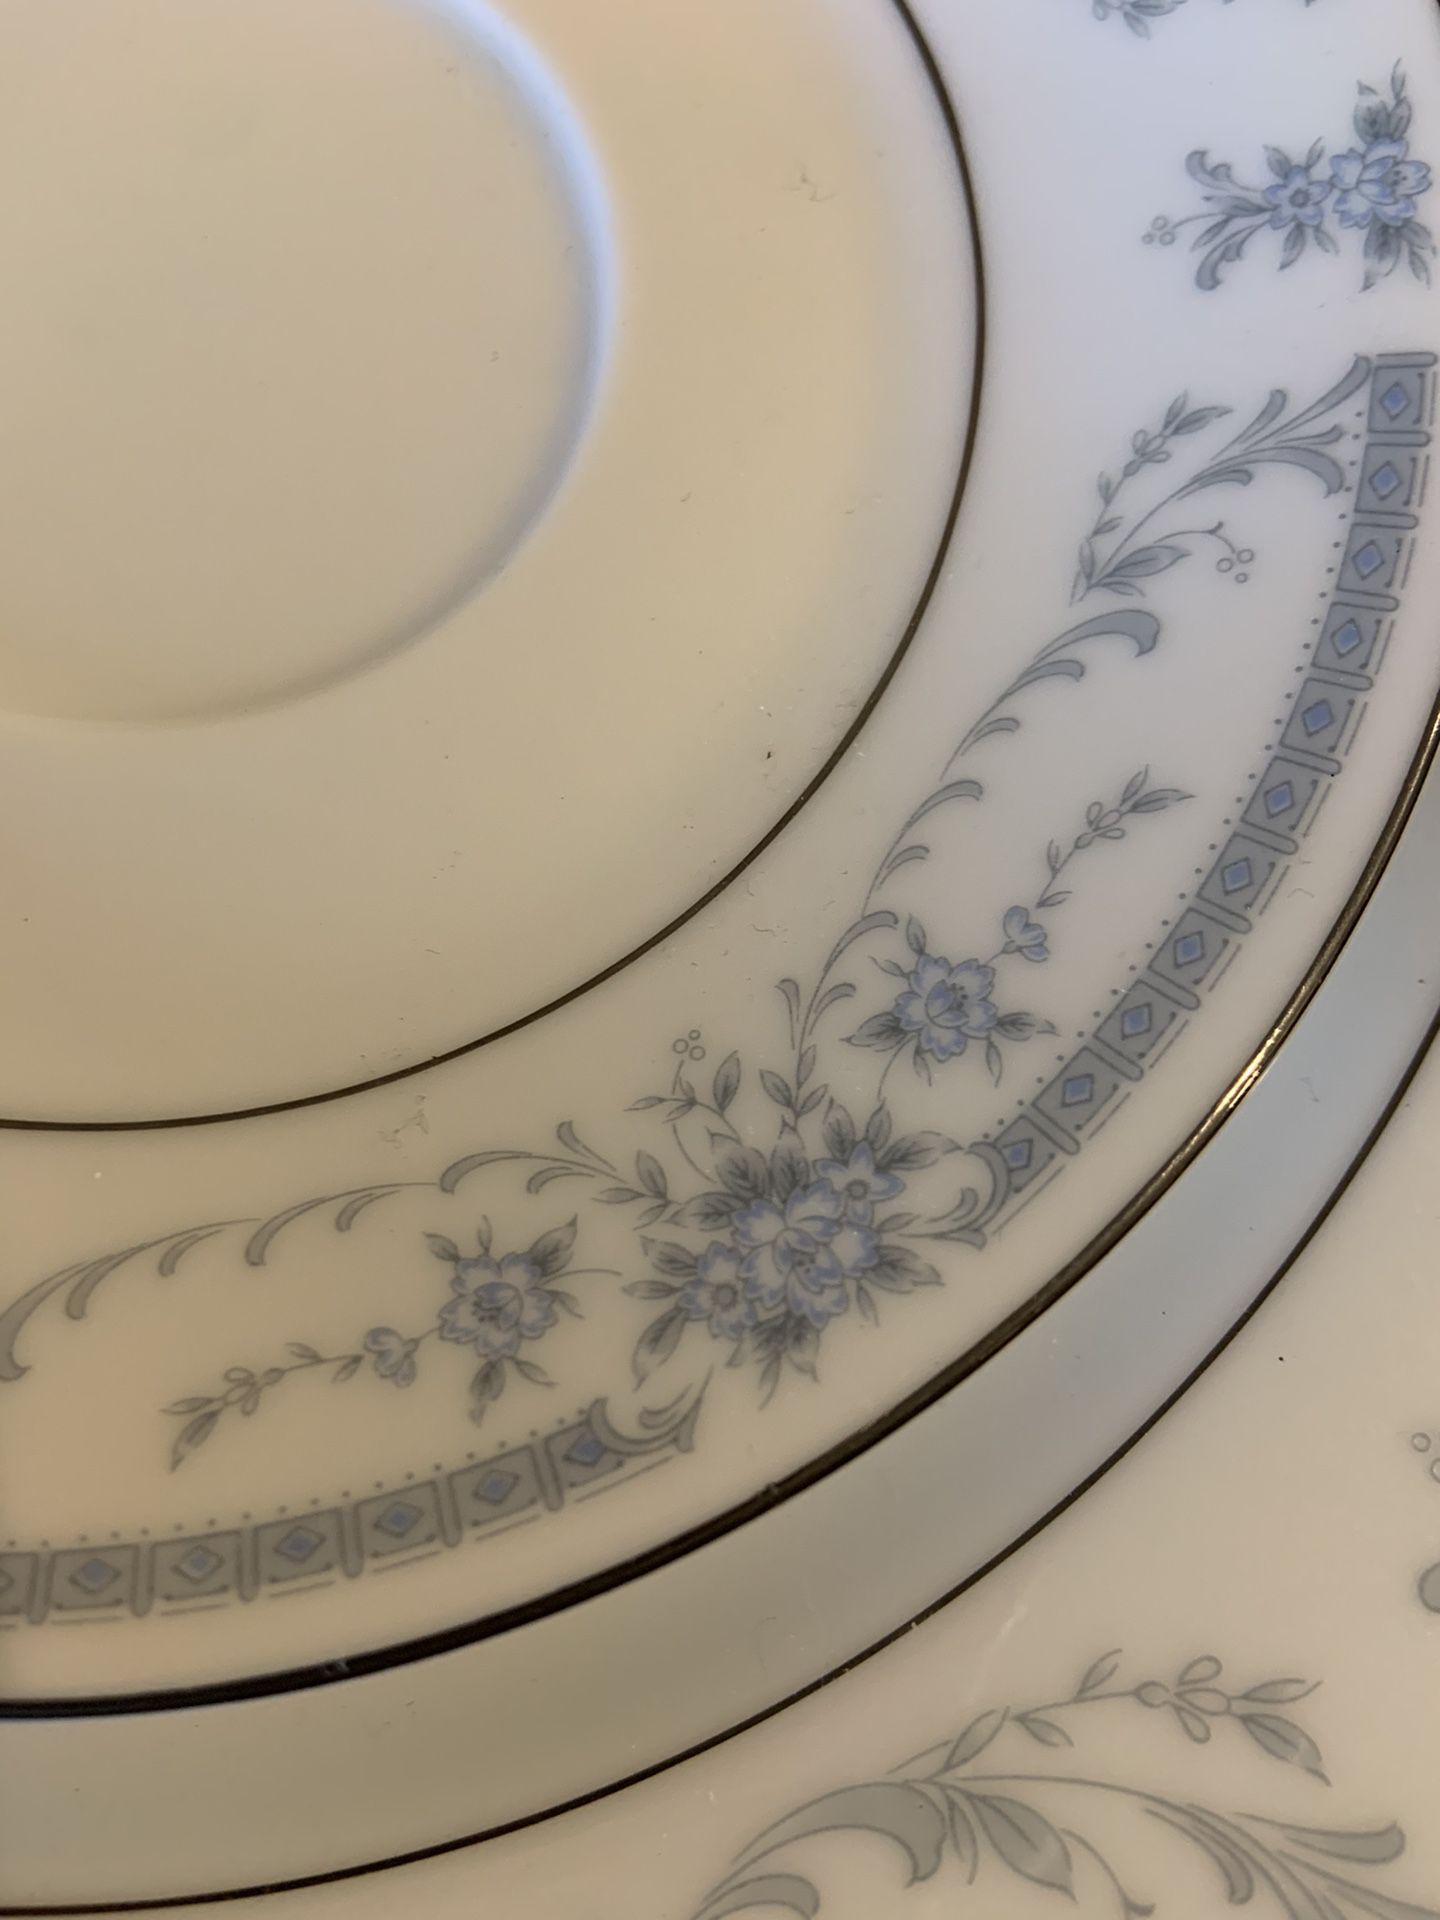 Sheffield Blue Whisper Porcelain Fina China